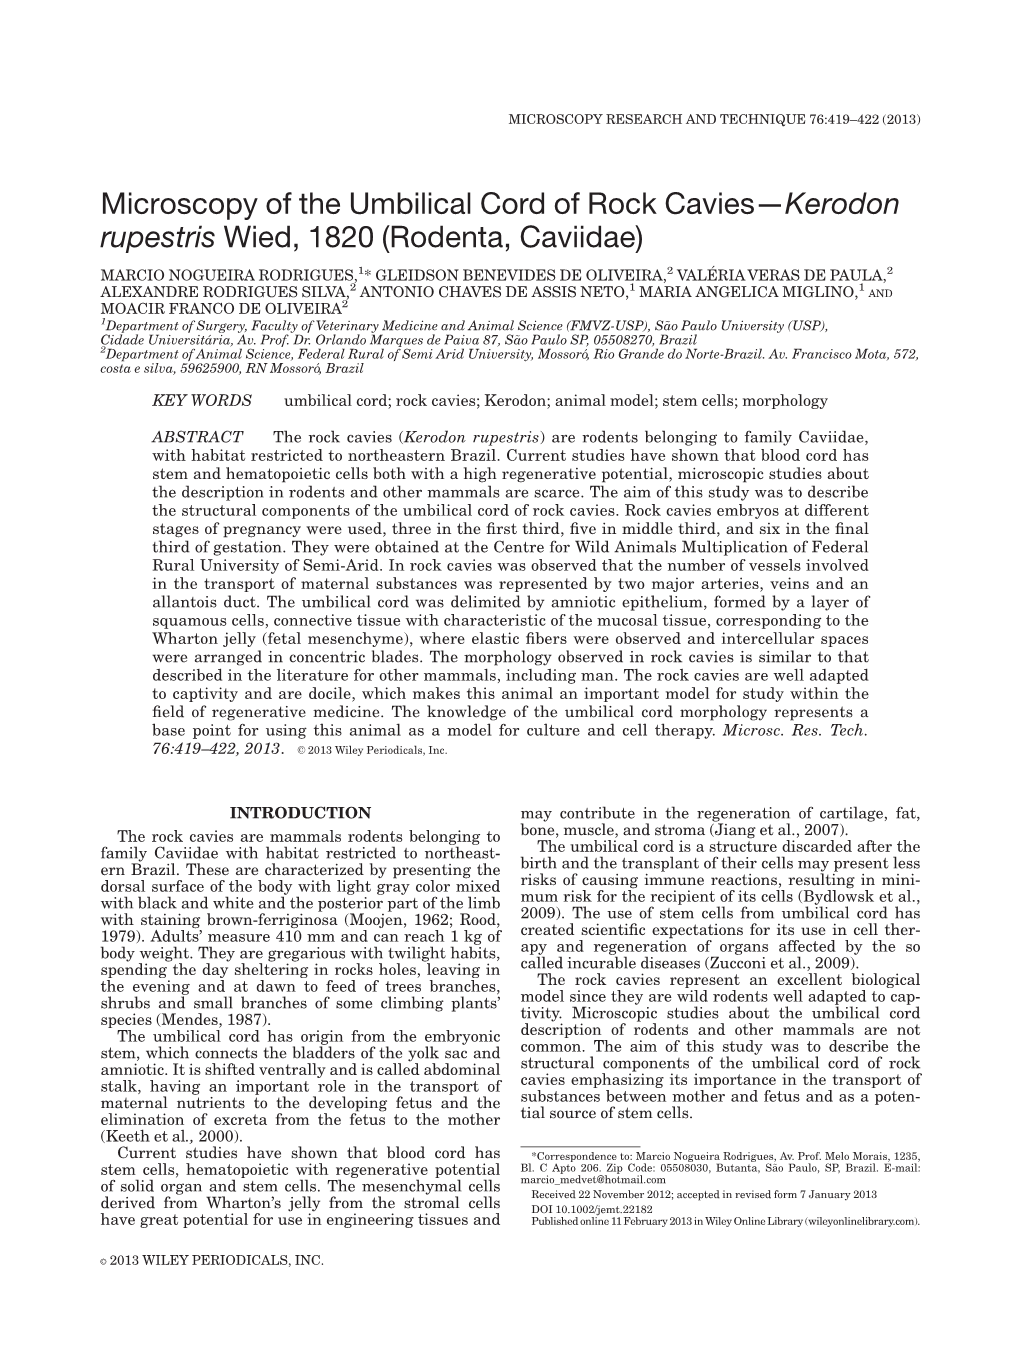 Microscopy of the Umbilical Cord of Rock Cavieskerodon Rupestris Wied